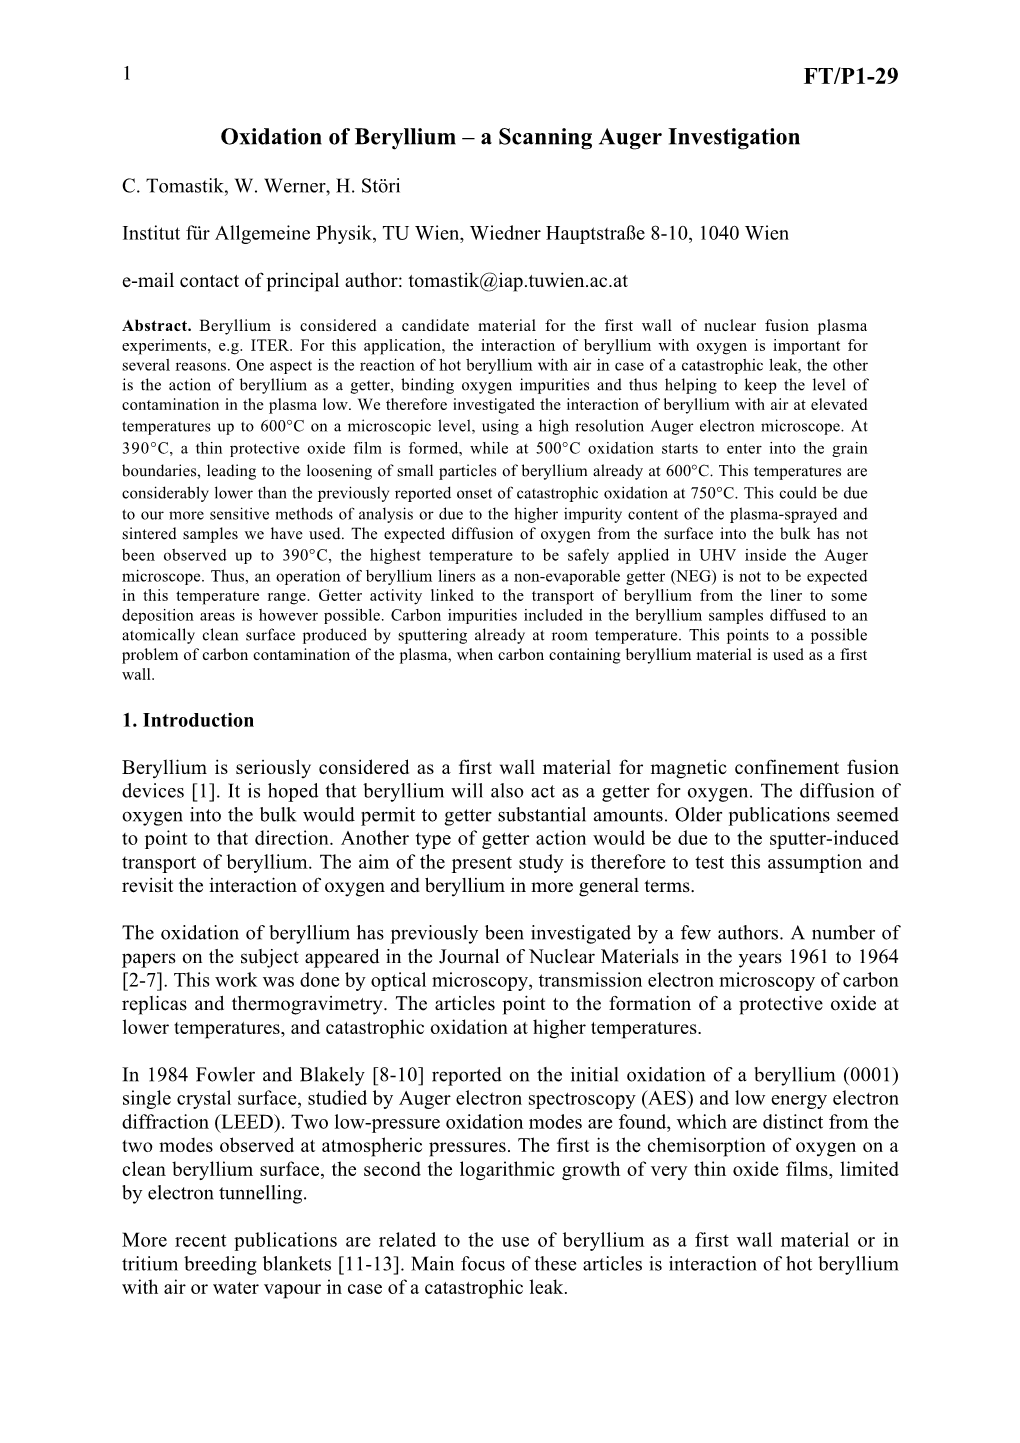 Oxidation of Beryllium – a Scanning Auger Investigation